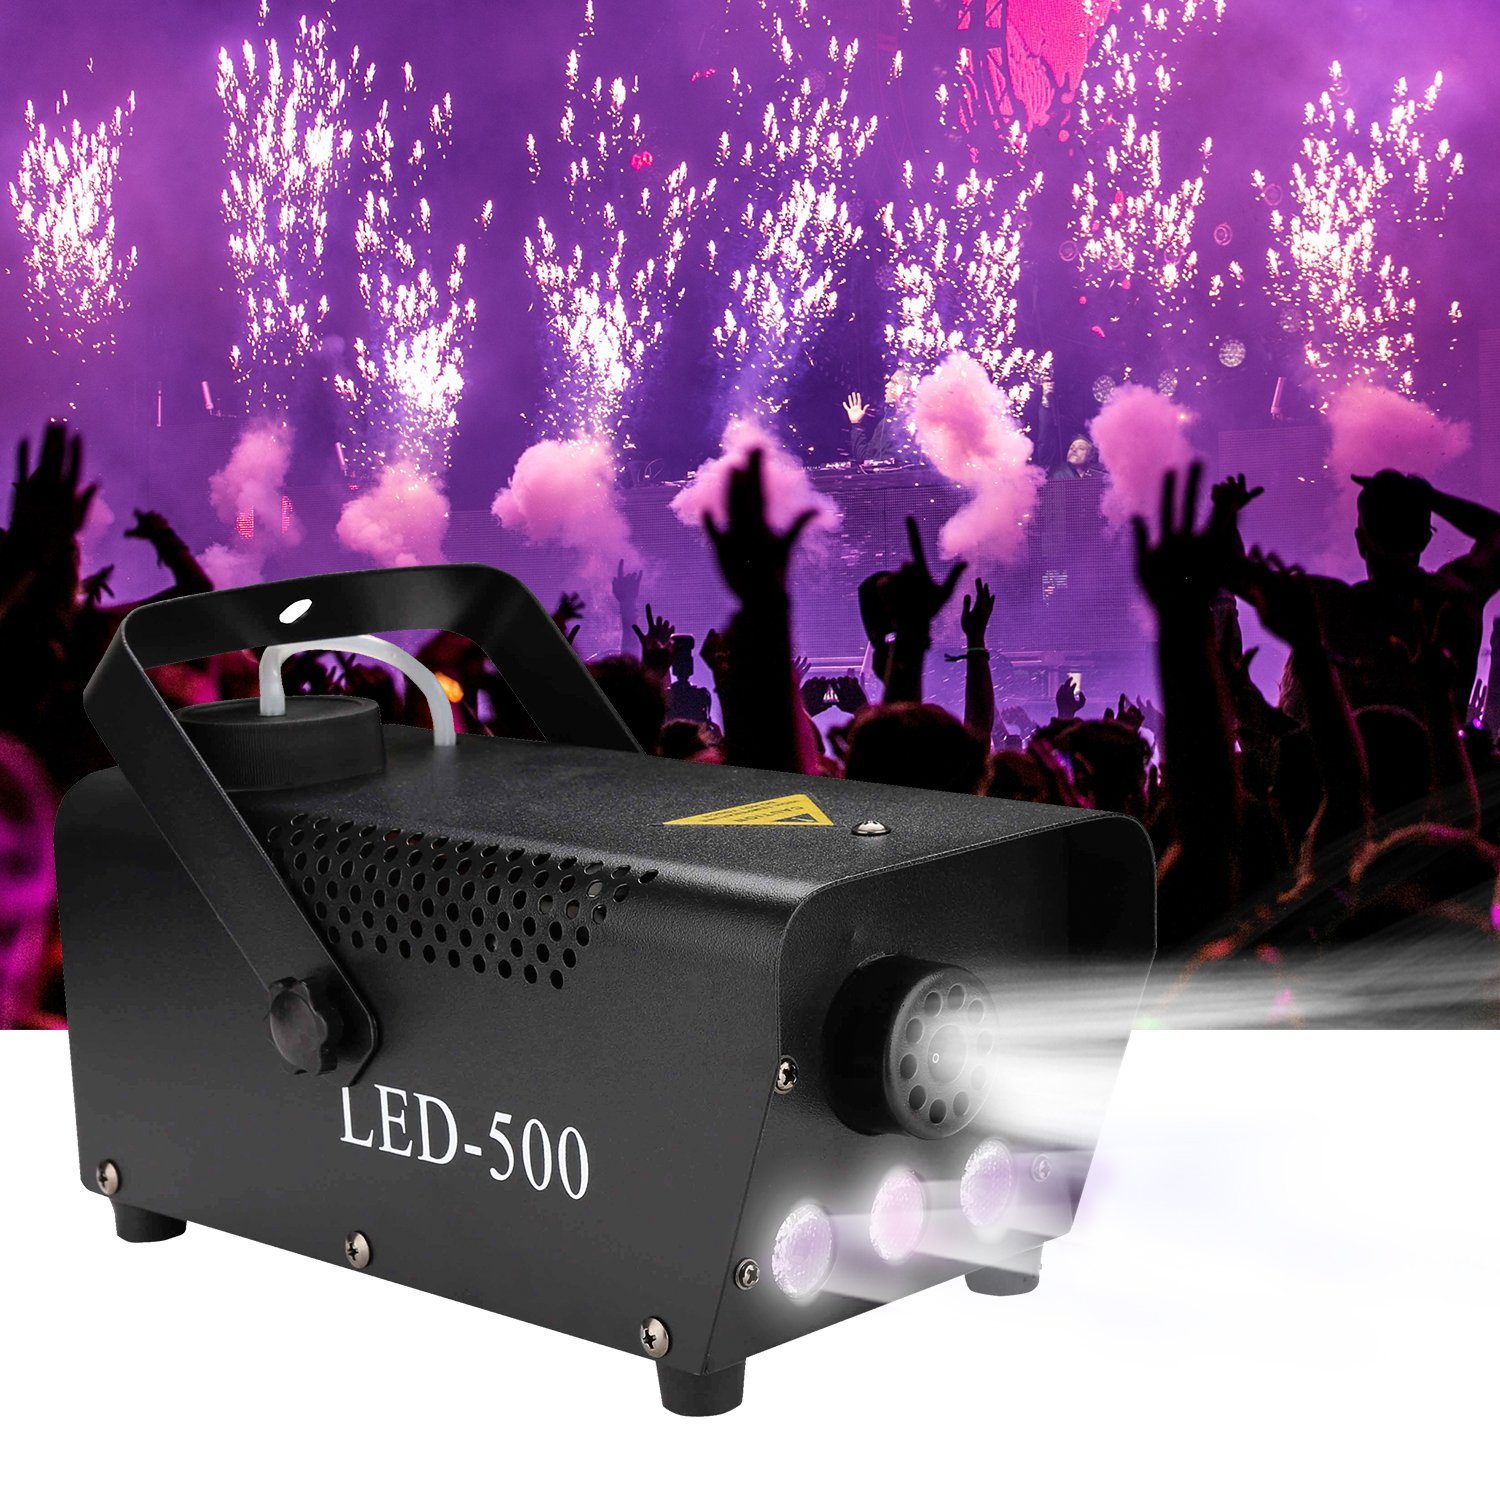 Rauchmaschine 500W LED, LED Yakimz Discolicht RGB, mit Nebelmaschine Bodennebelmaschine